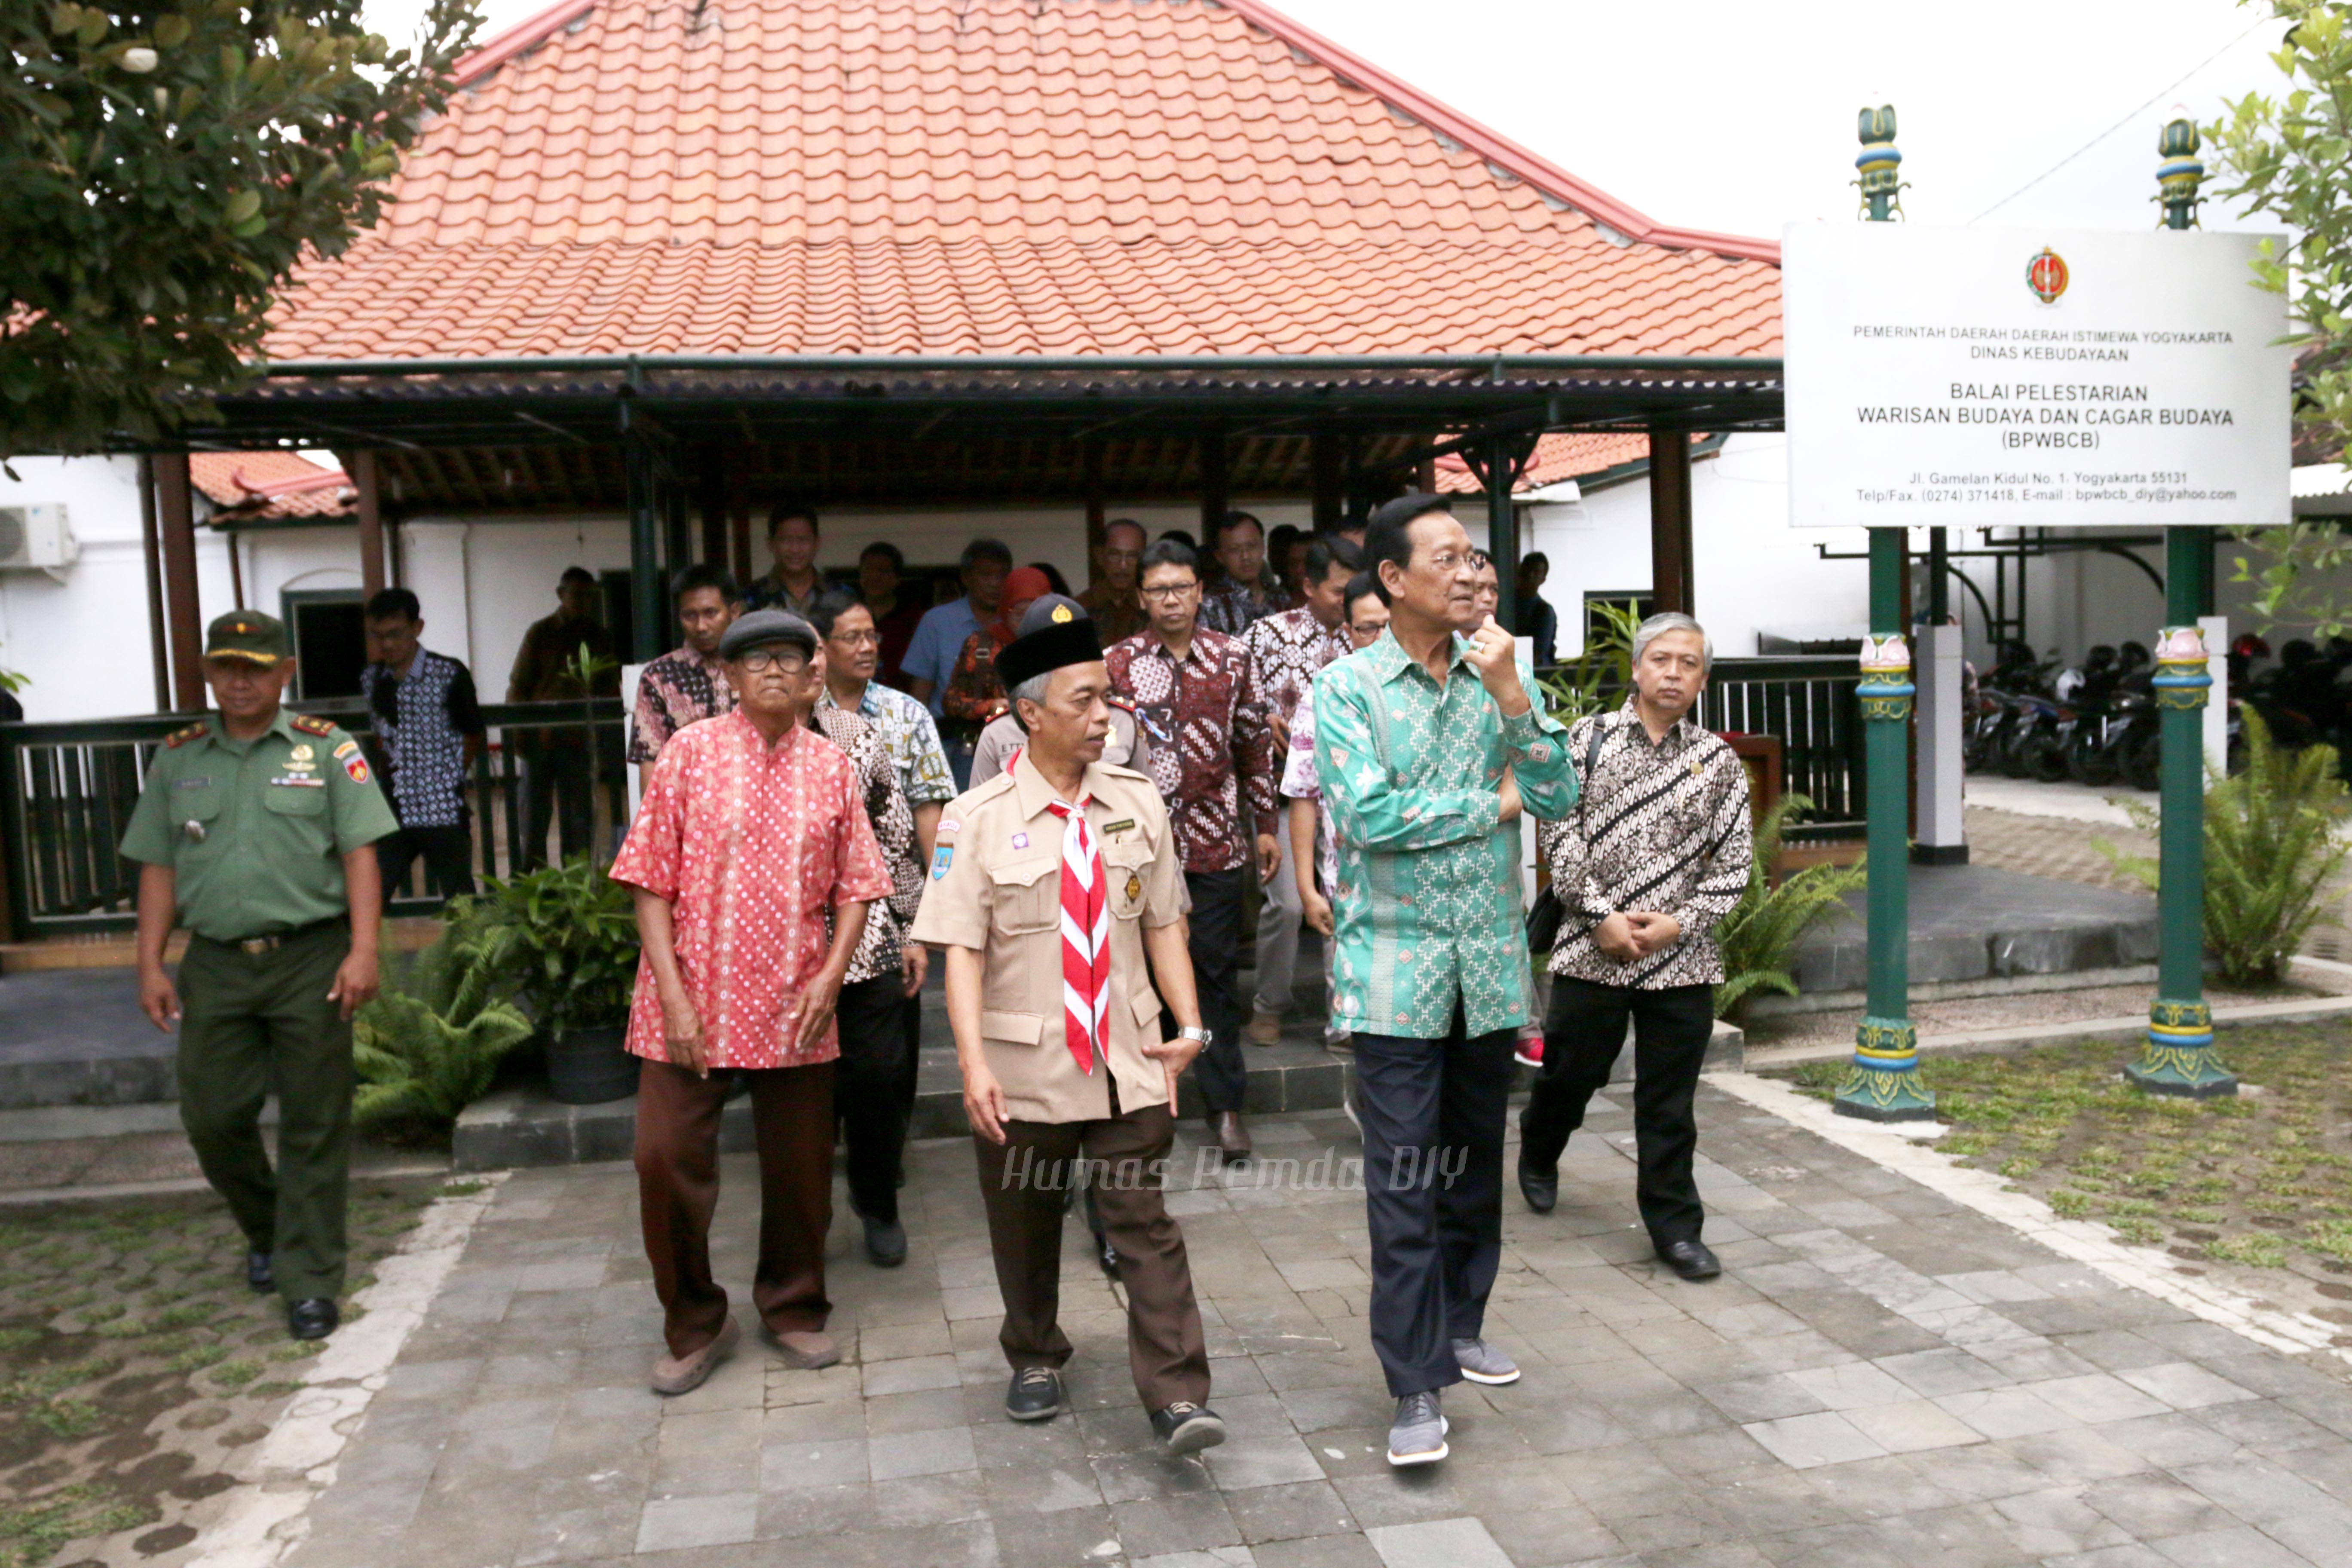  Gubernur DIY Kunjungi Sejumlah Rumah Cagar Budaya Yogyakarta